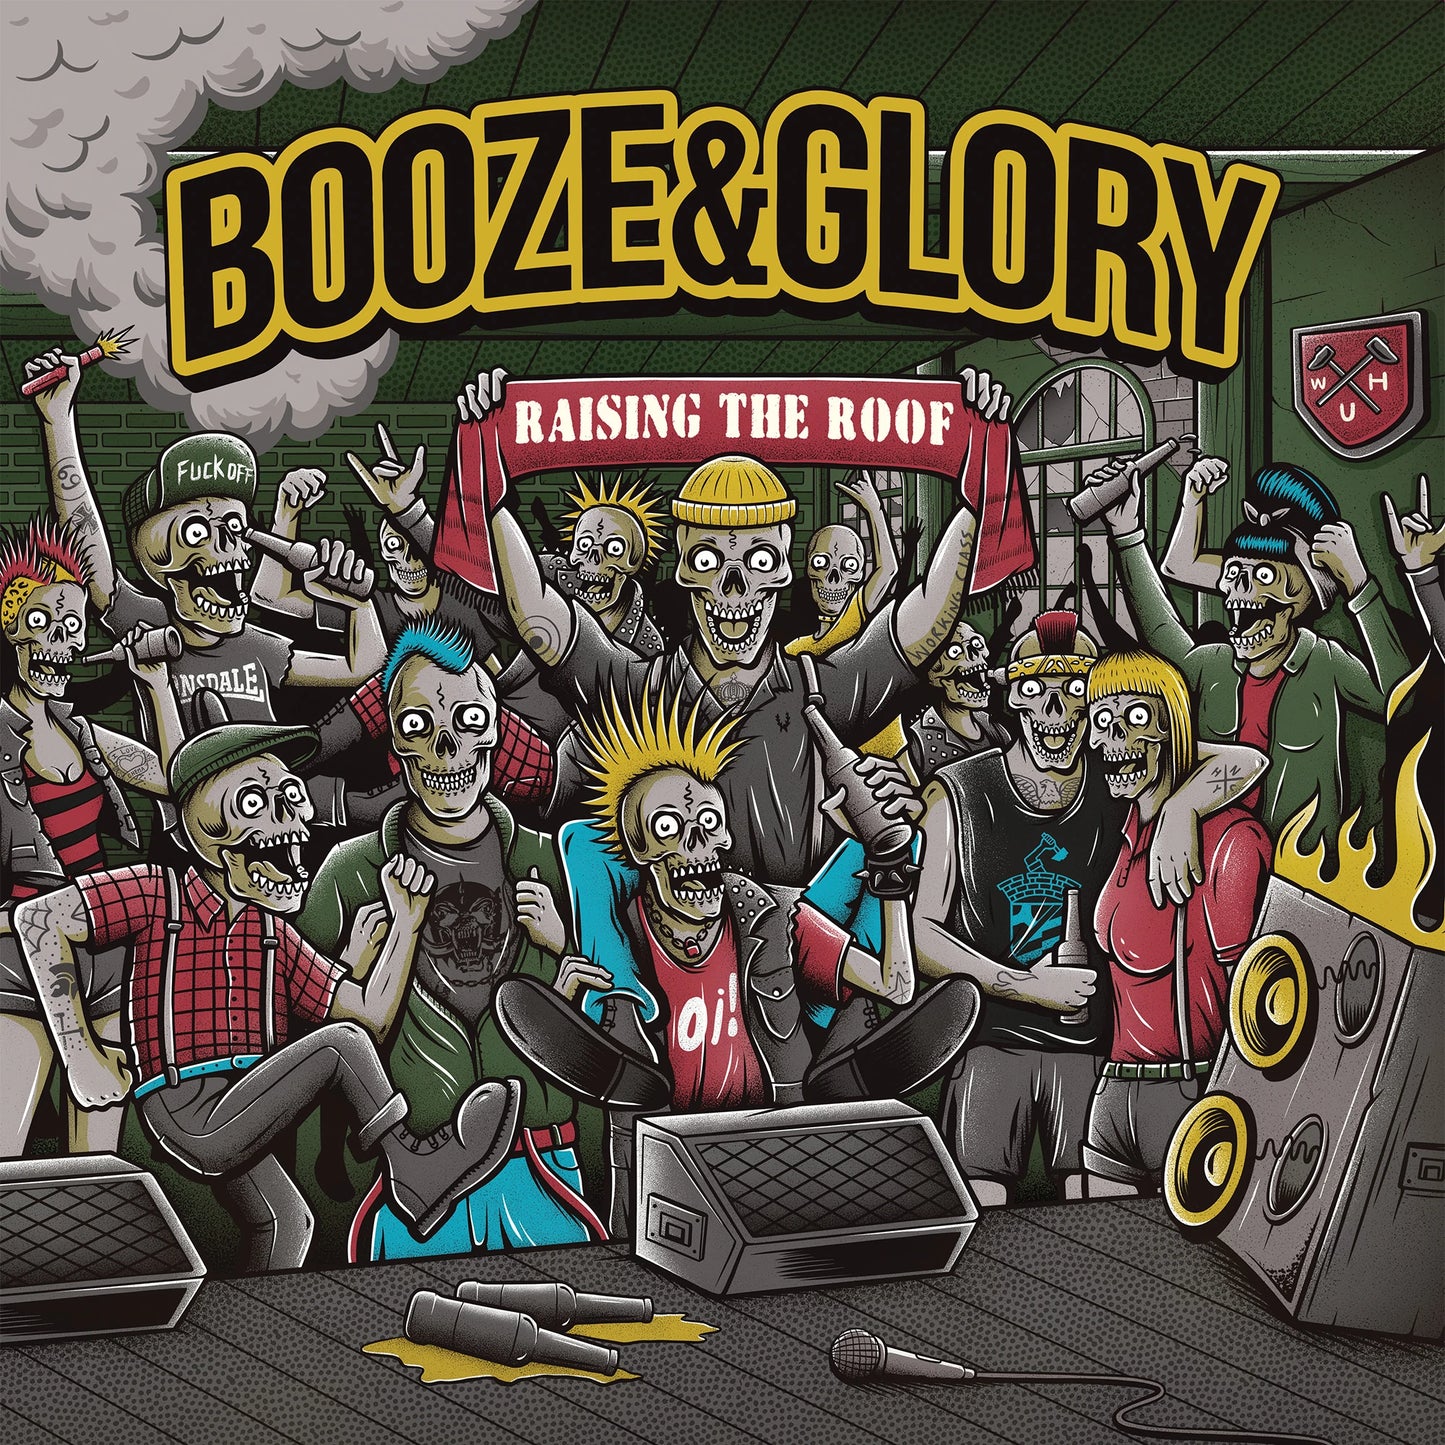 Booze & Glory - "Raising The Roof" LP